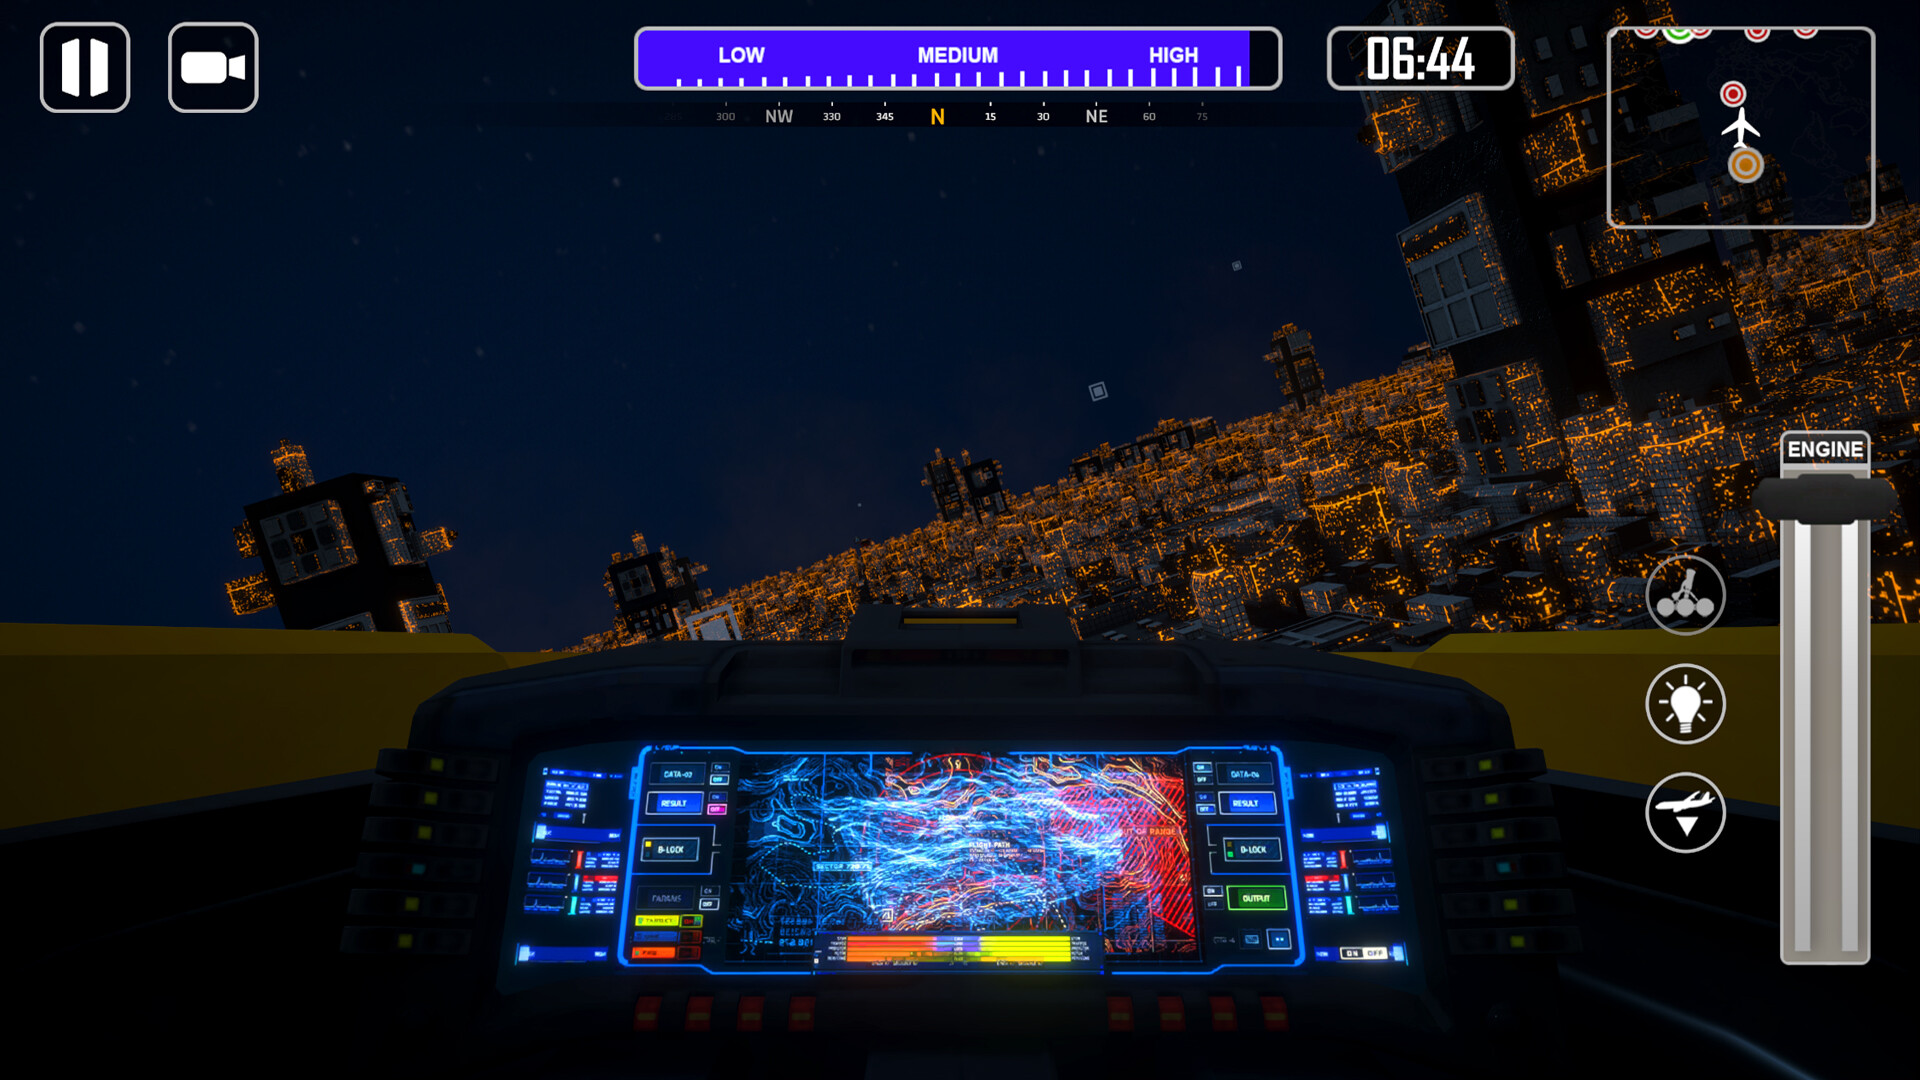 Ultimate Flight Simulator Pro Free Download for PC